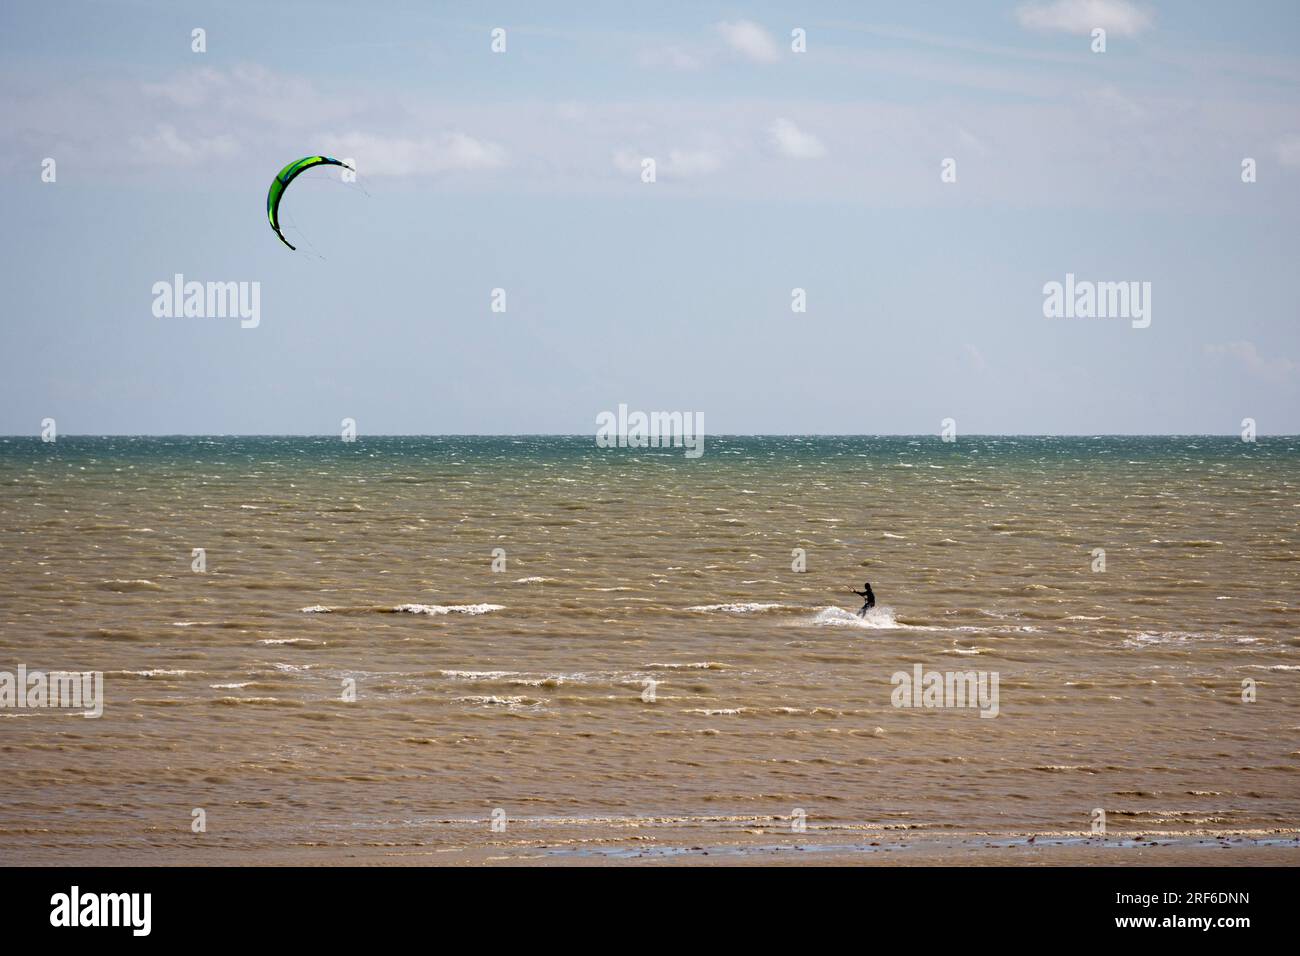 colour image of a kitesurfer off the coast of Worthing, West Sussex, UK Stock Photo